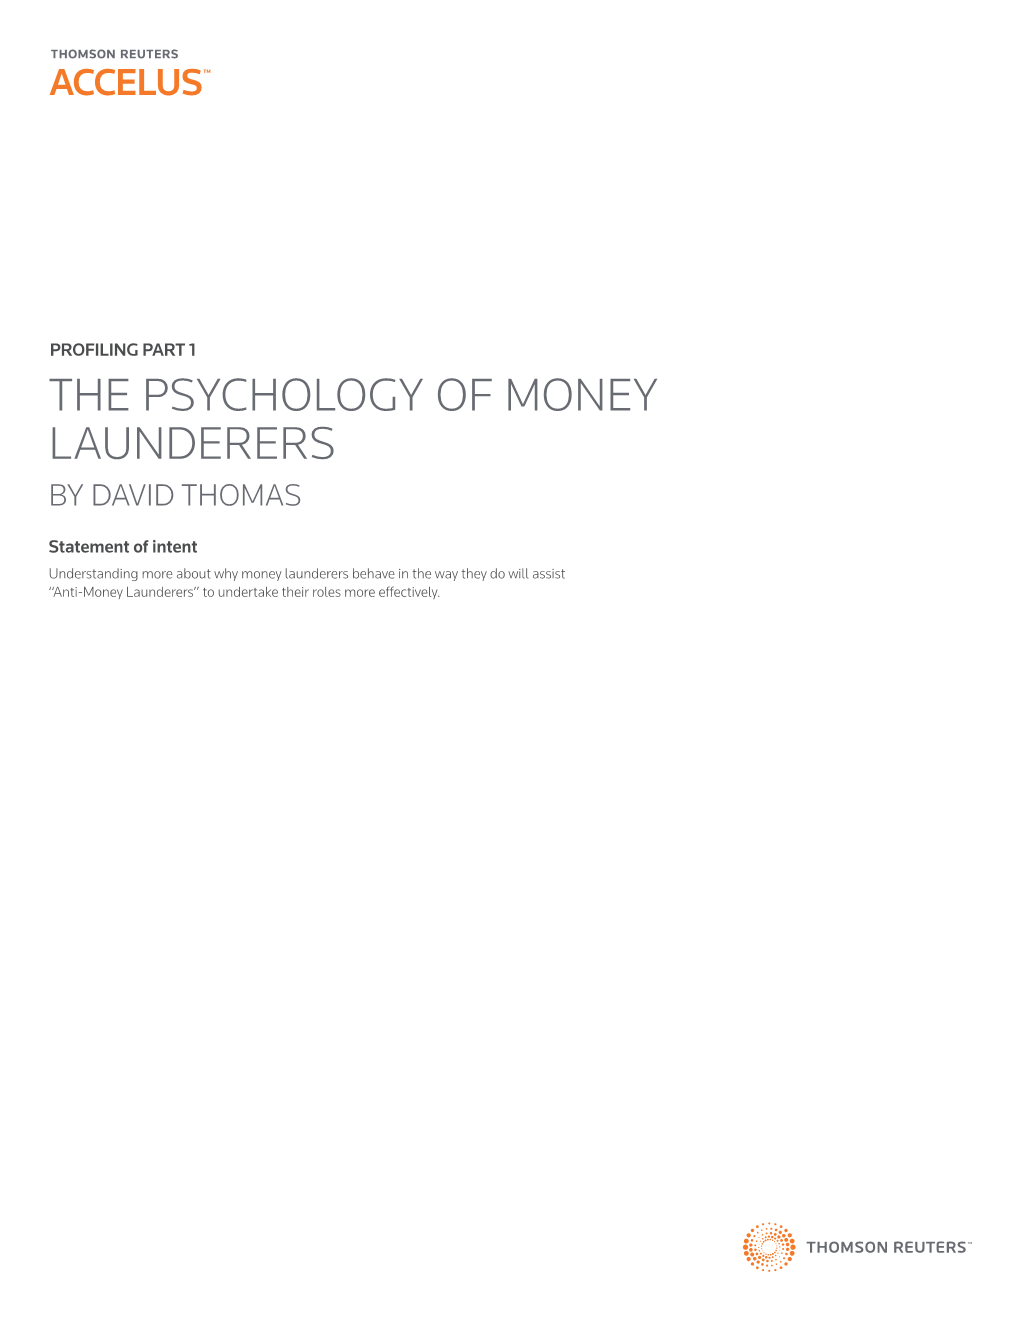 The Psychology of Money Launderers by David Thomas